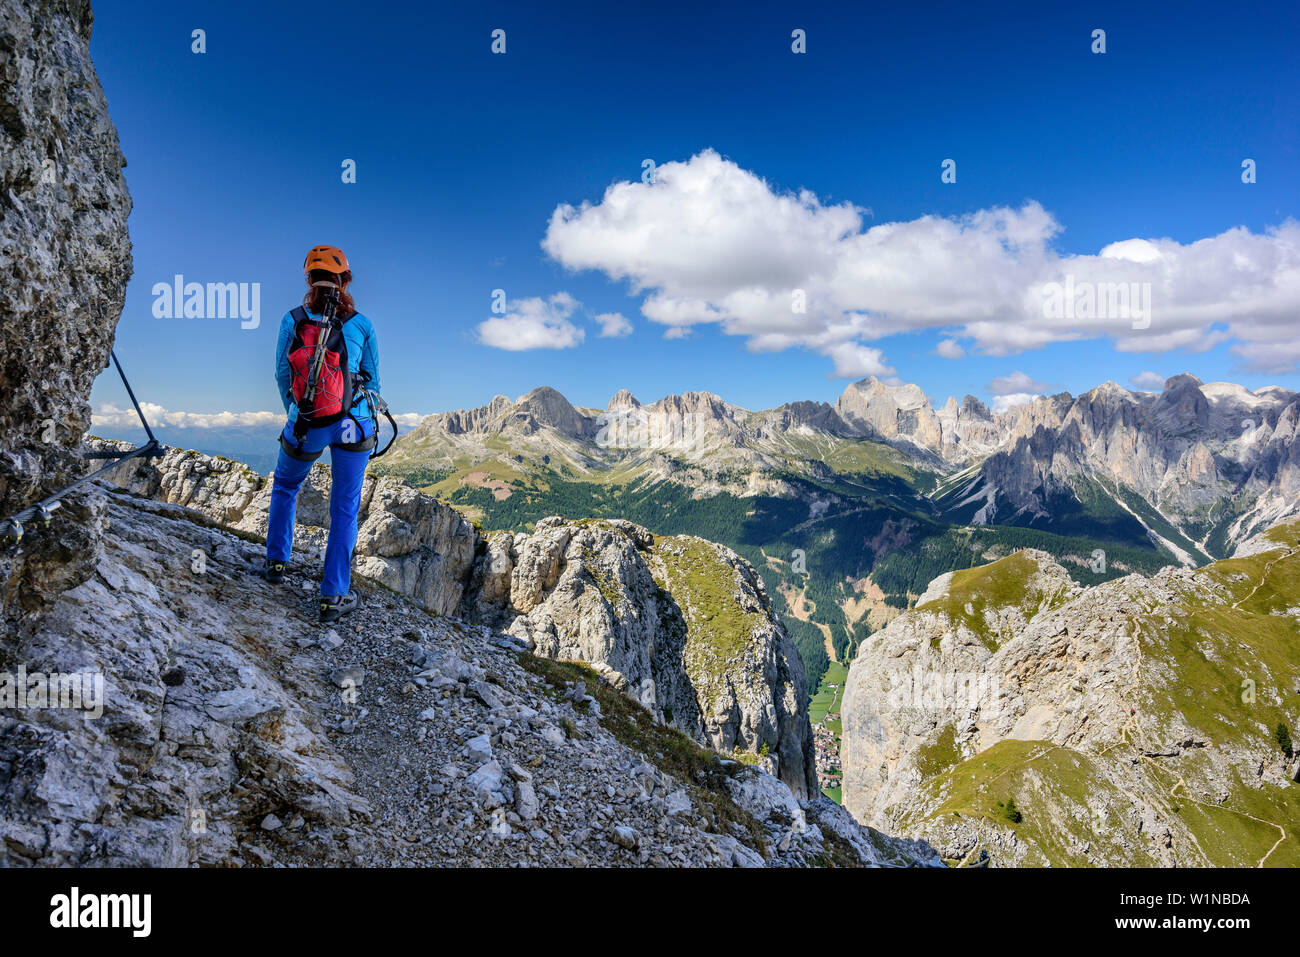 Woman ascending on fixed rope route looking towards Rosengarten range, Sas Aut, Vallaccia range, Marmolada, Dolomites, UNESCO World Heritage Dolomites Stock Photo